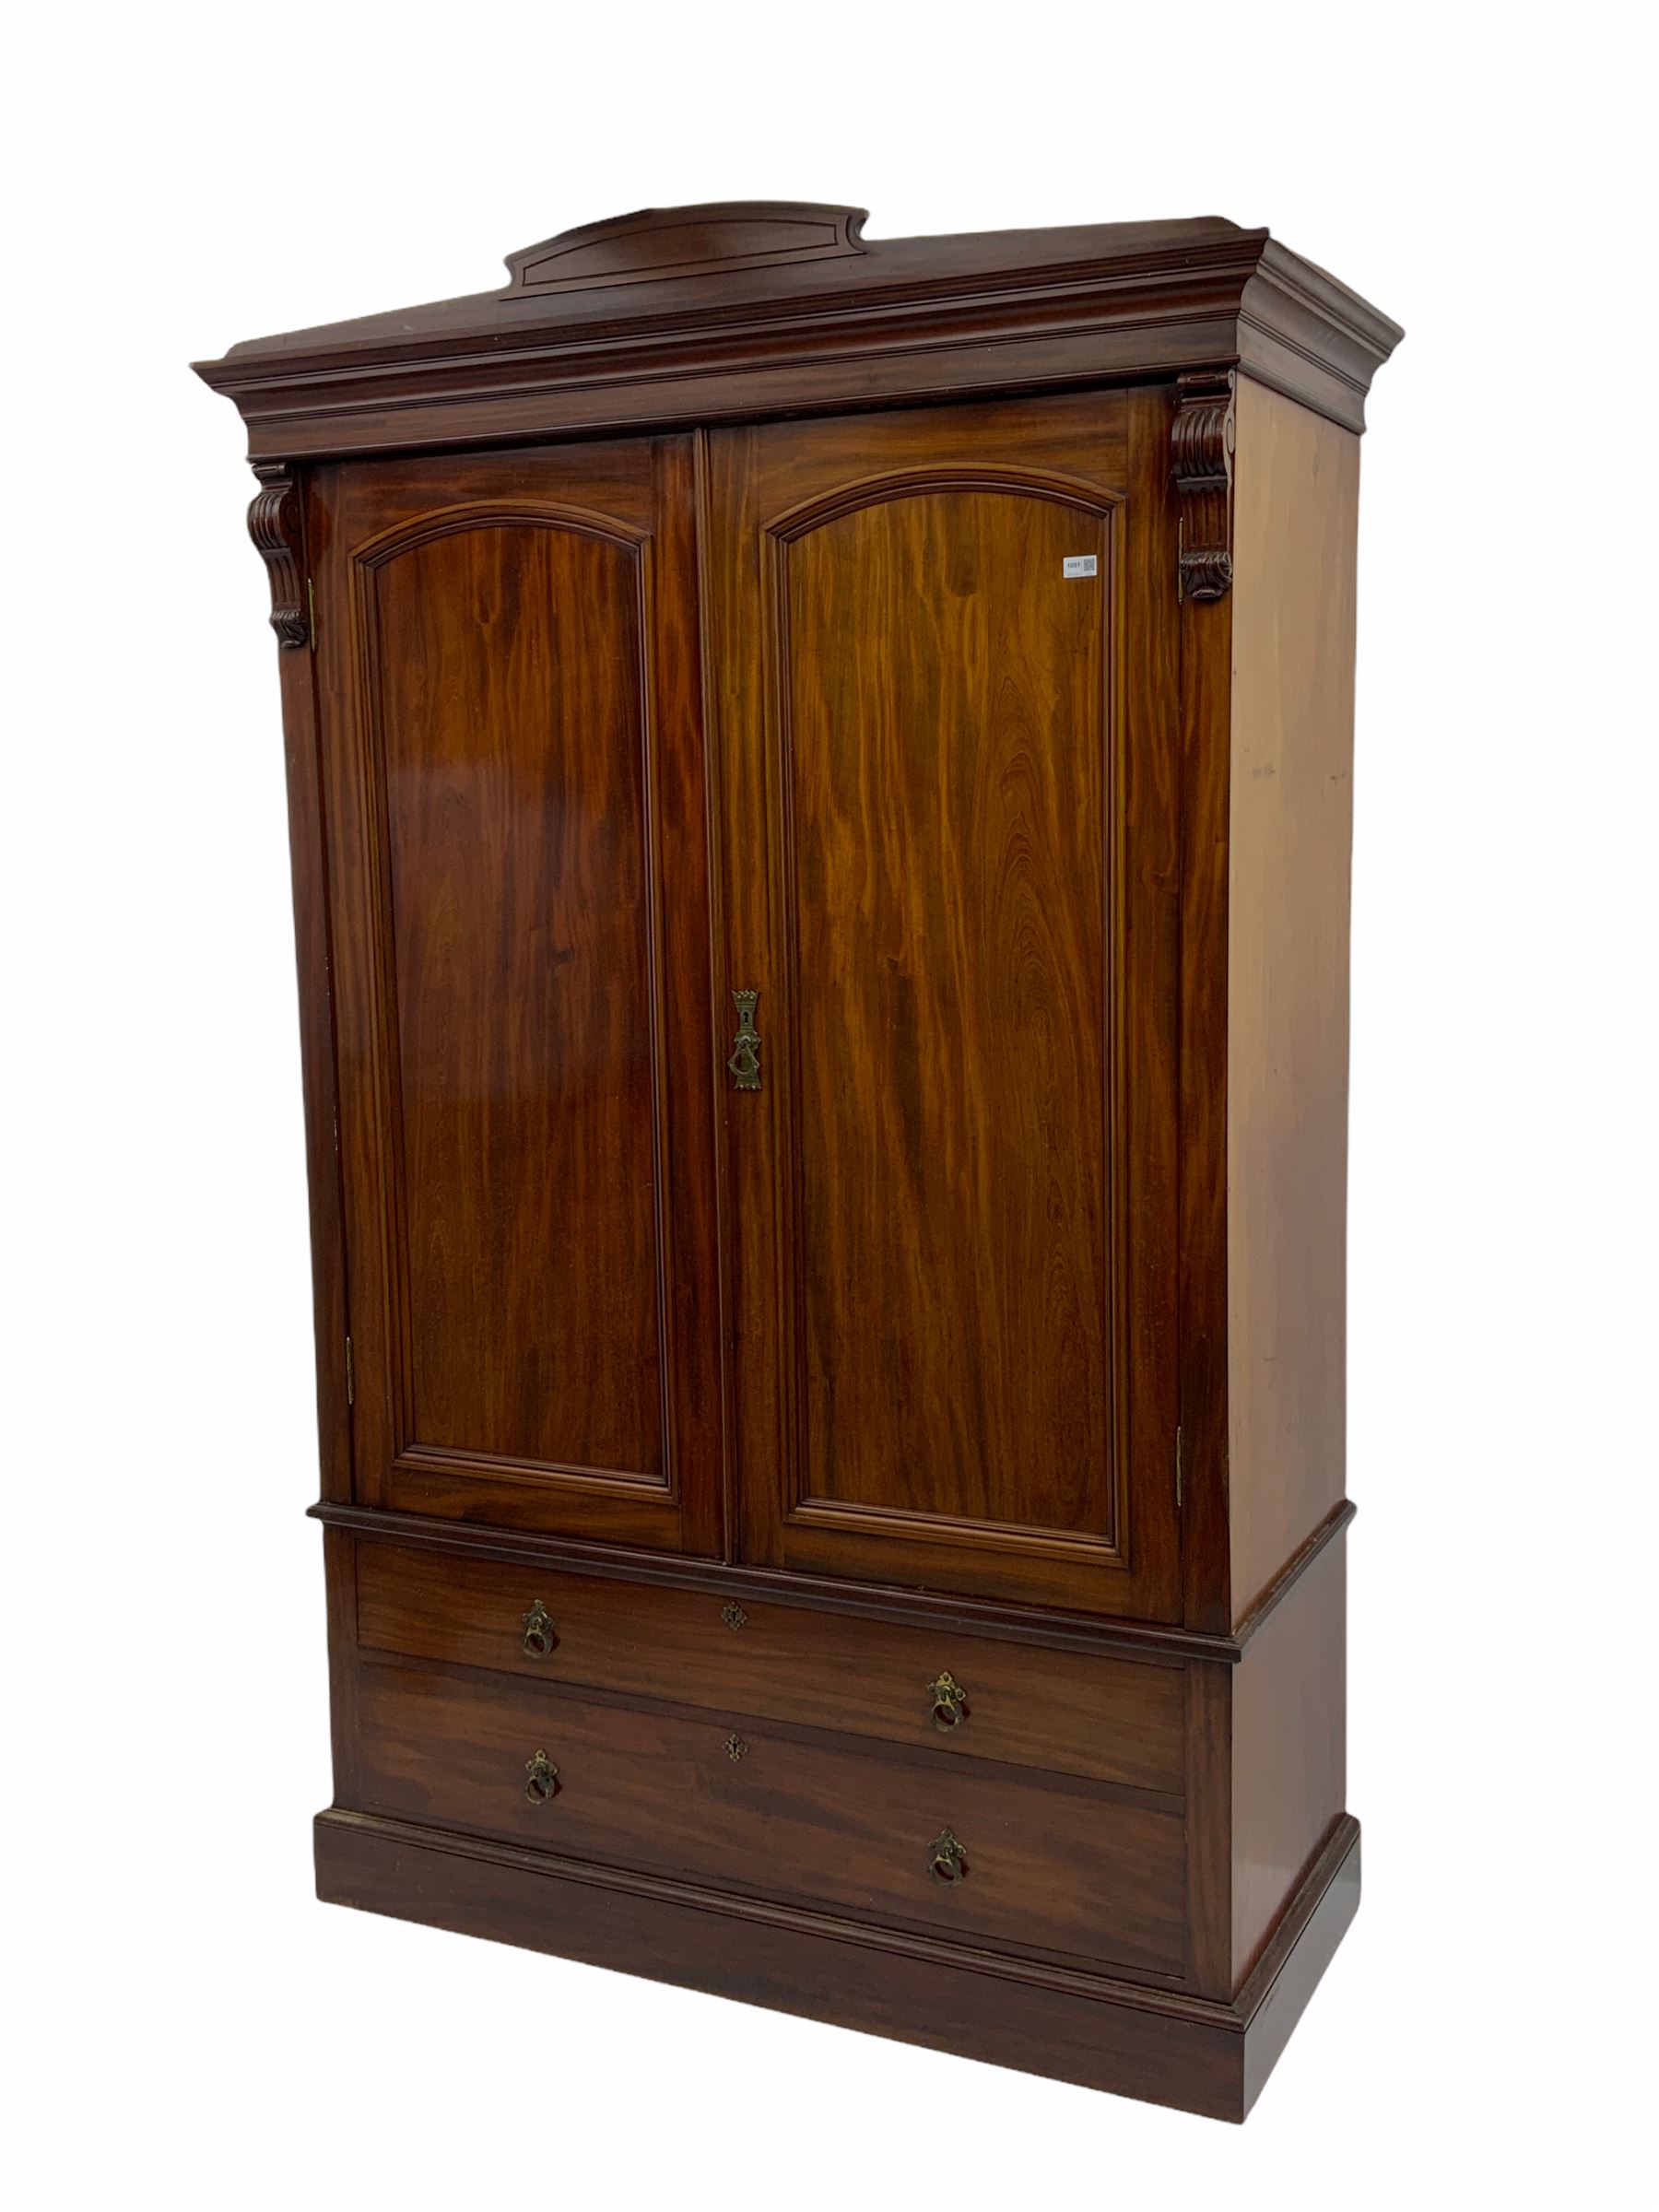 Late Victorian figured mahogany double wardrobe - Image 2 of 4